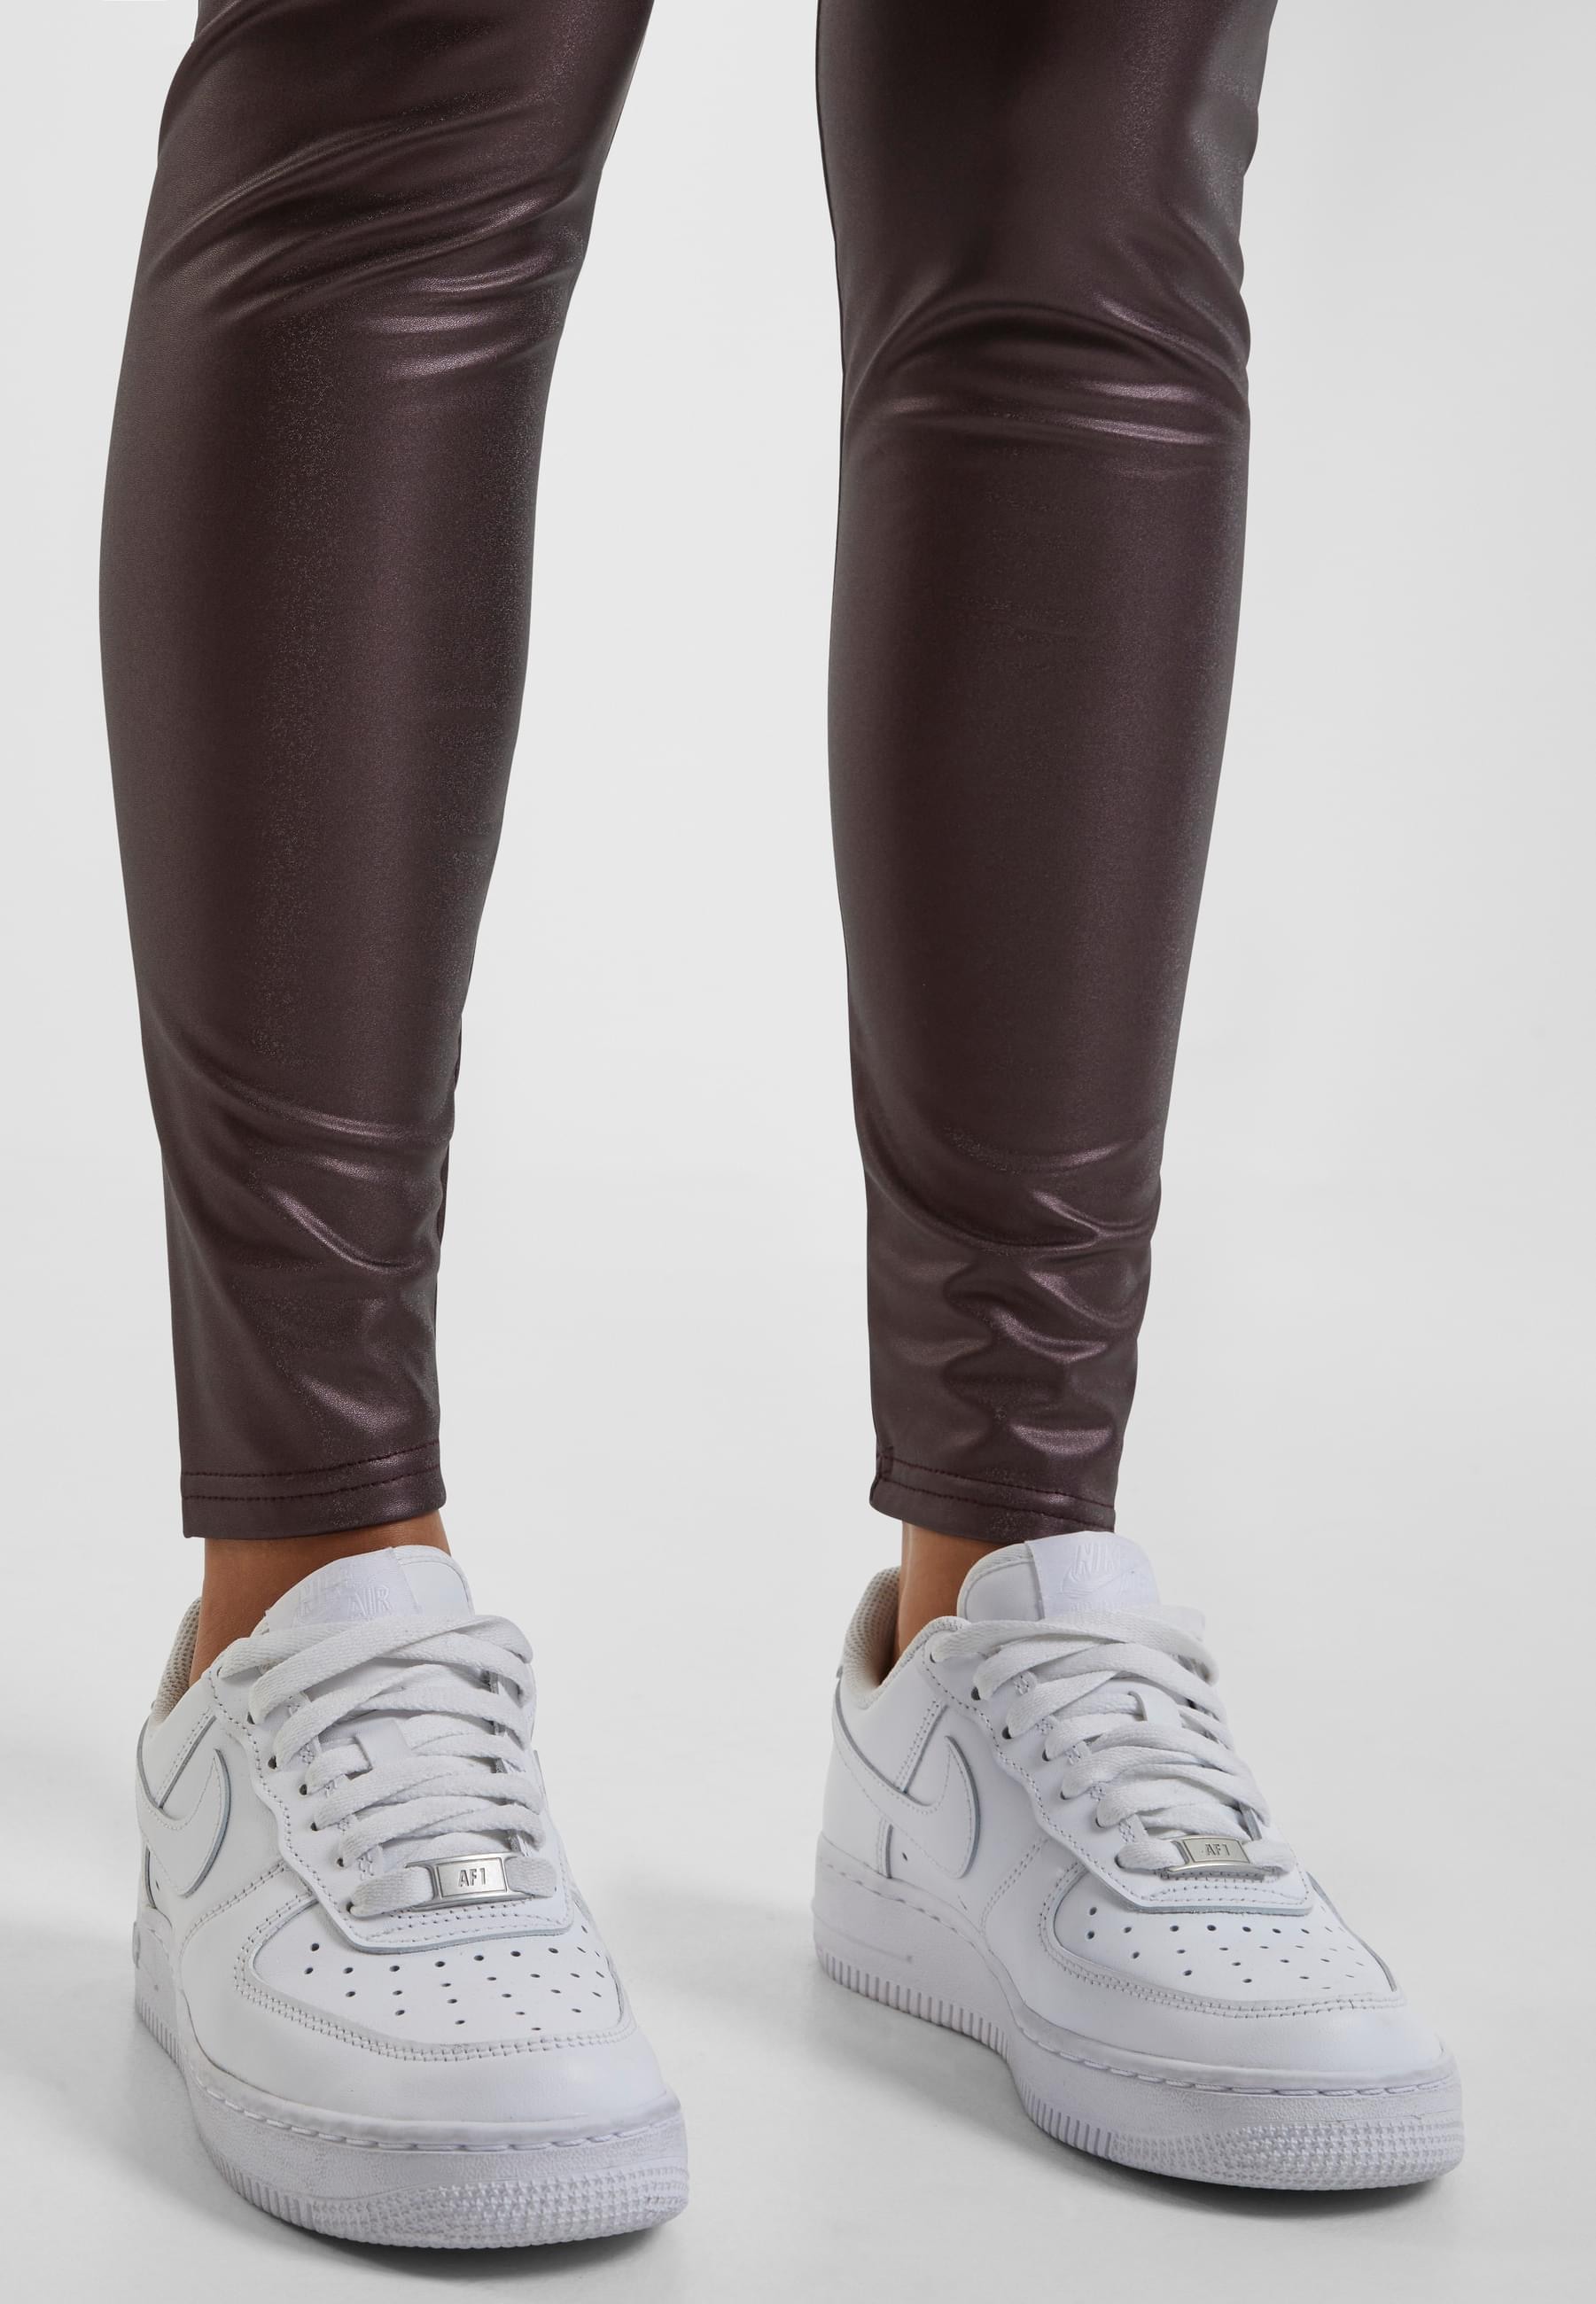 URBAN CLASSICS Leggings »Urban Classics Damen Ladies Faux Leather High Waist Leggings«, (1 tlg.)